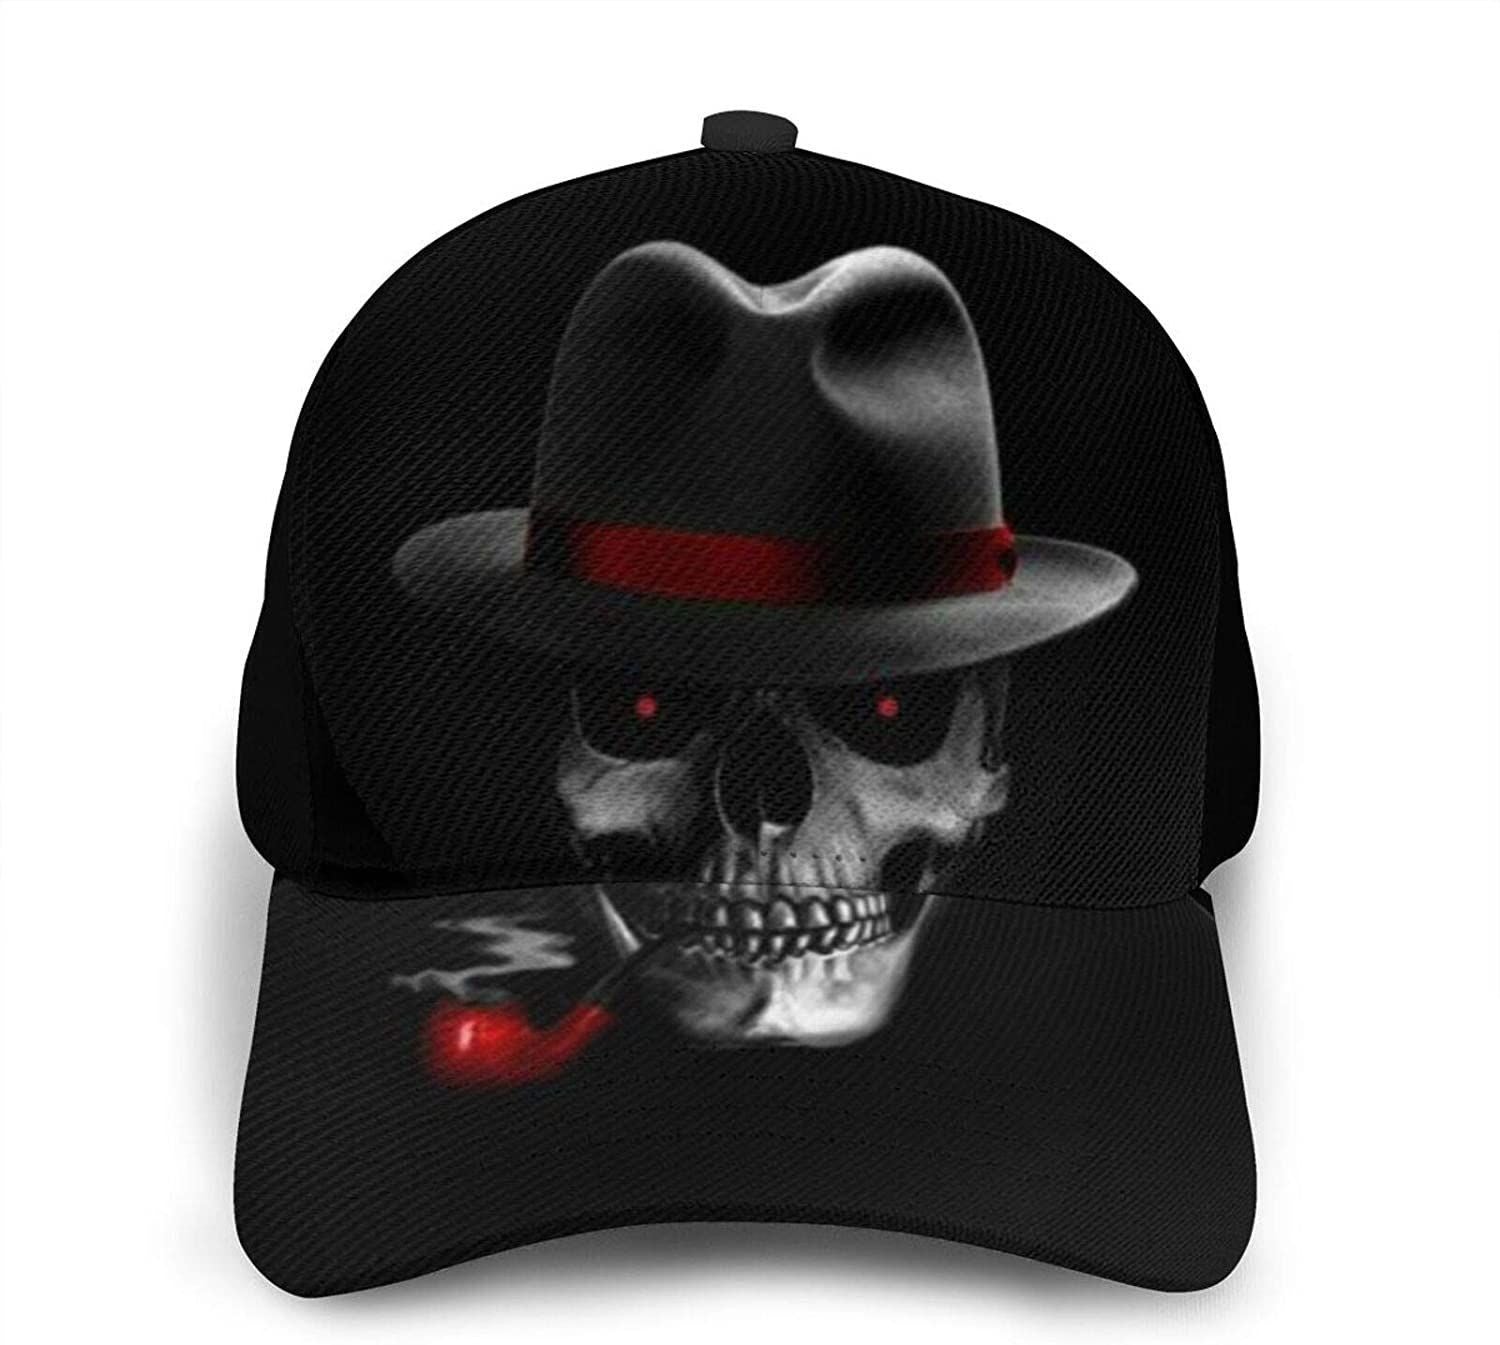 Unisex 3D Printed Baseball Cap Black Skull with Hat Smoking Fashion Caps Trucker Hats Sports Hat for Men Women